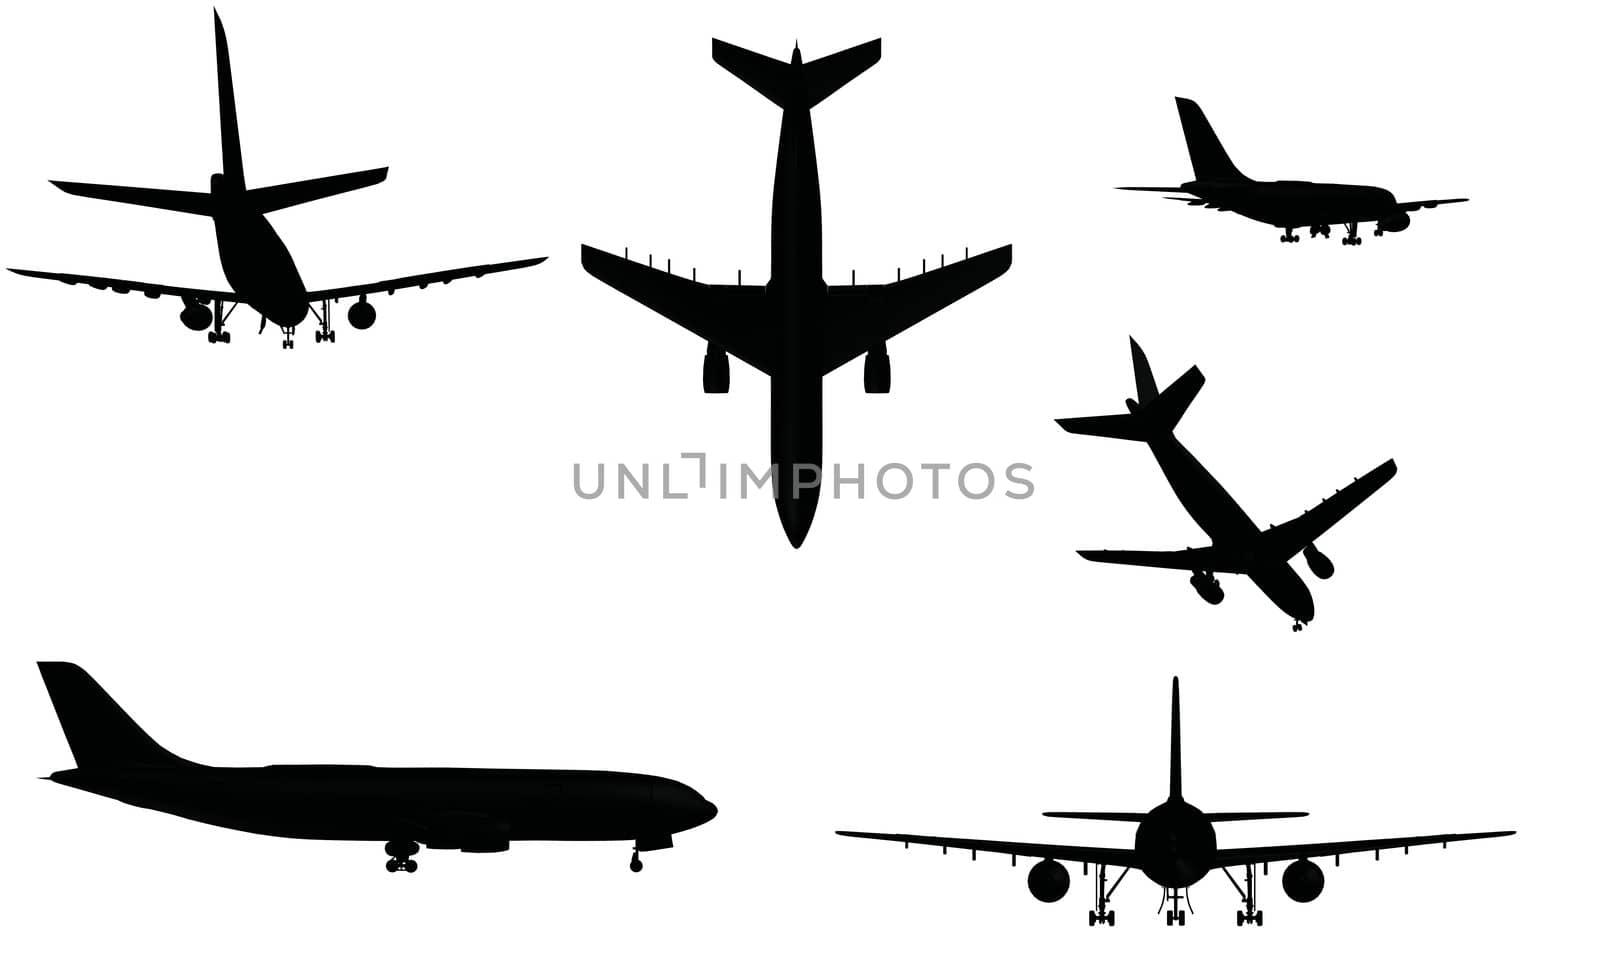 airplane silhouettes